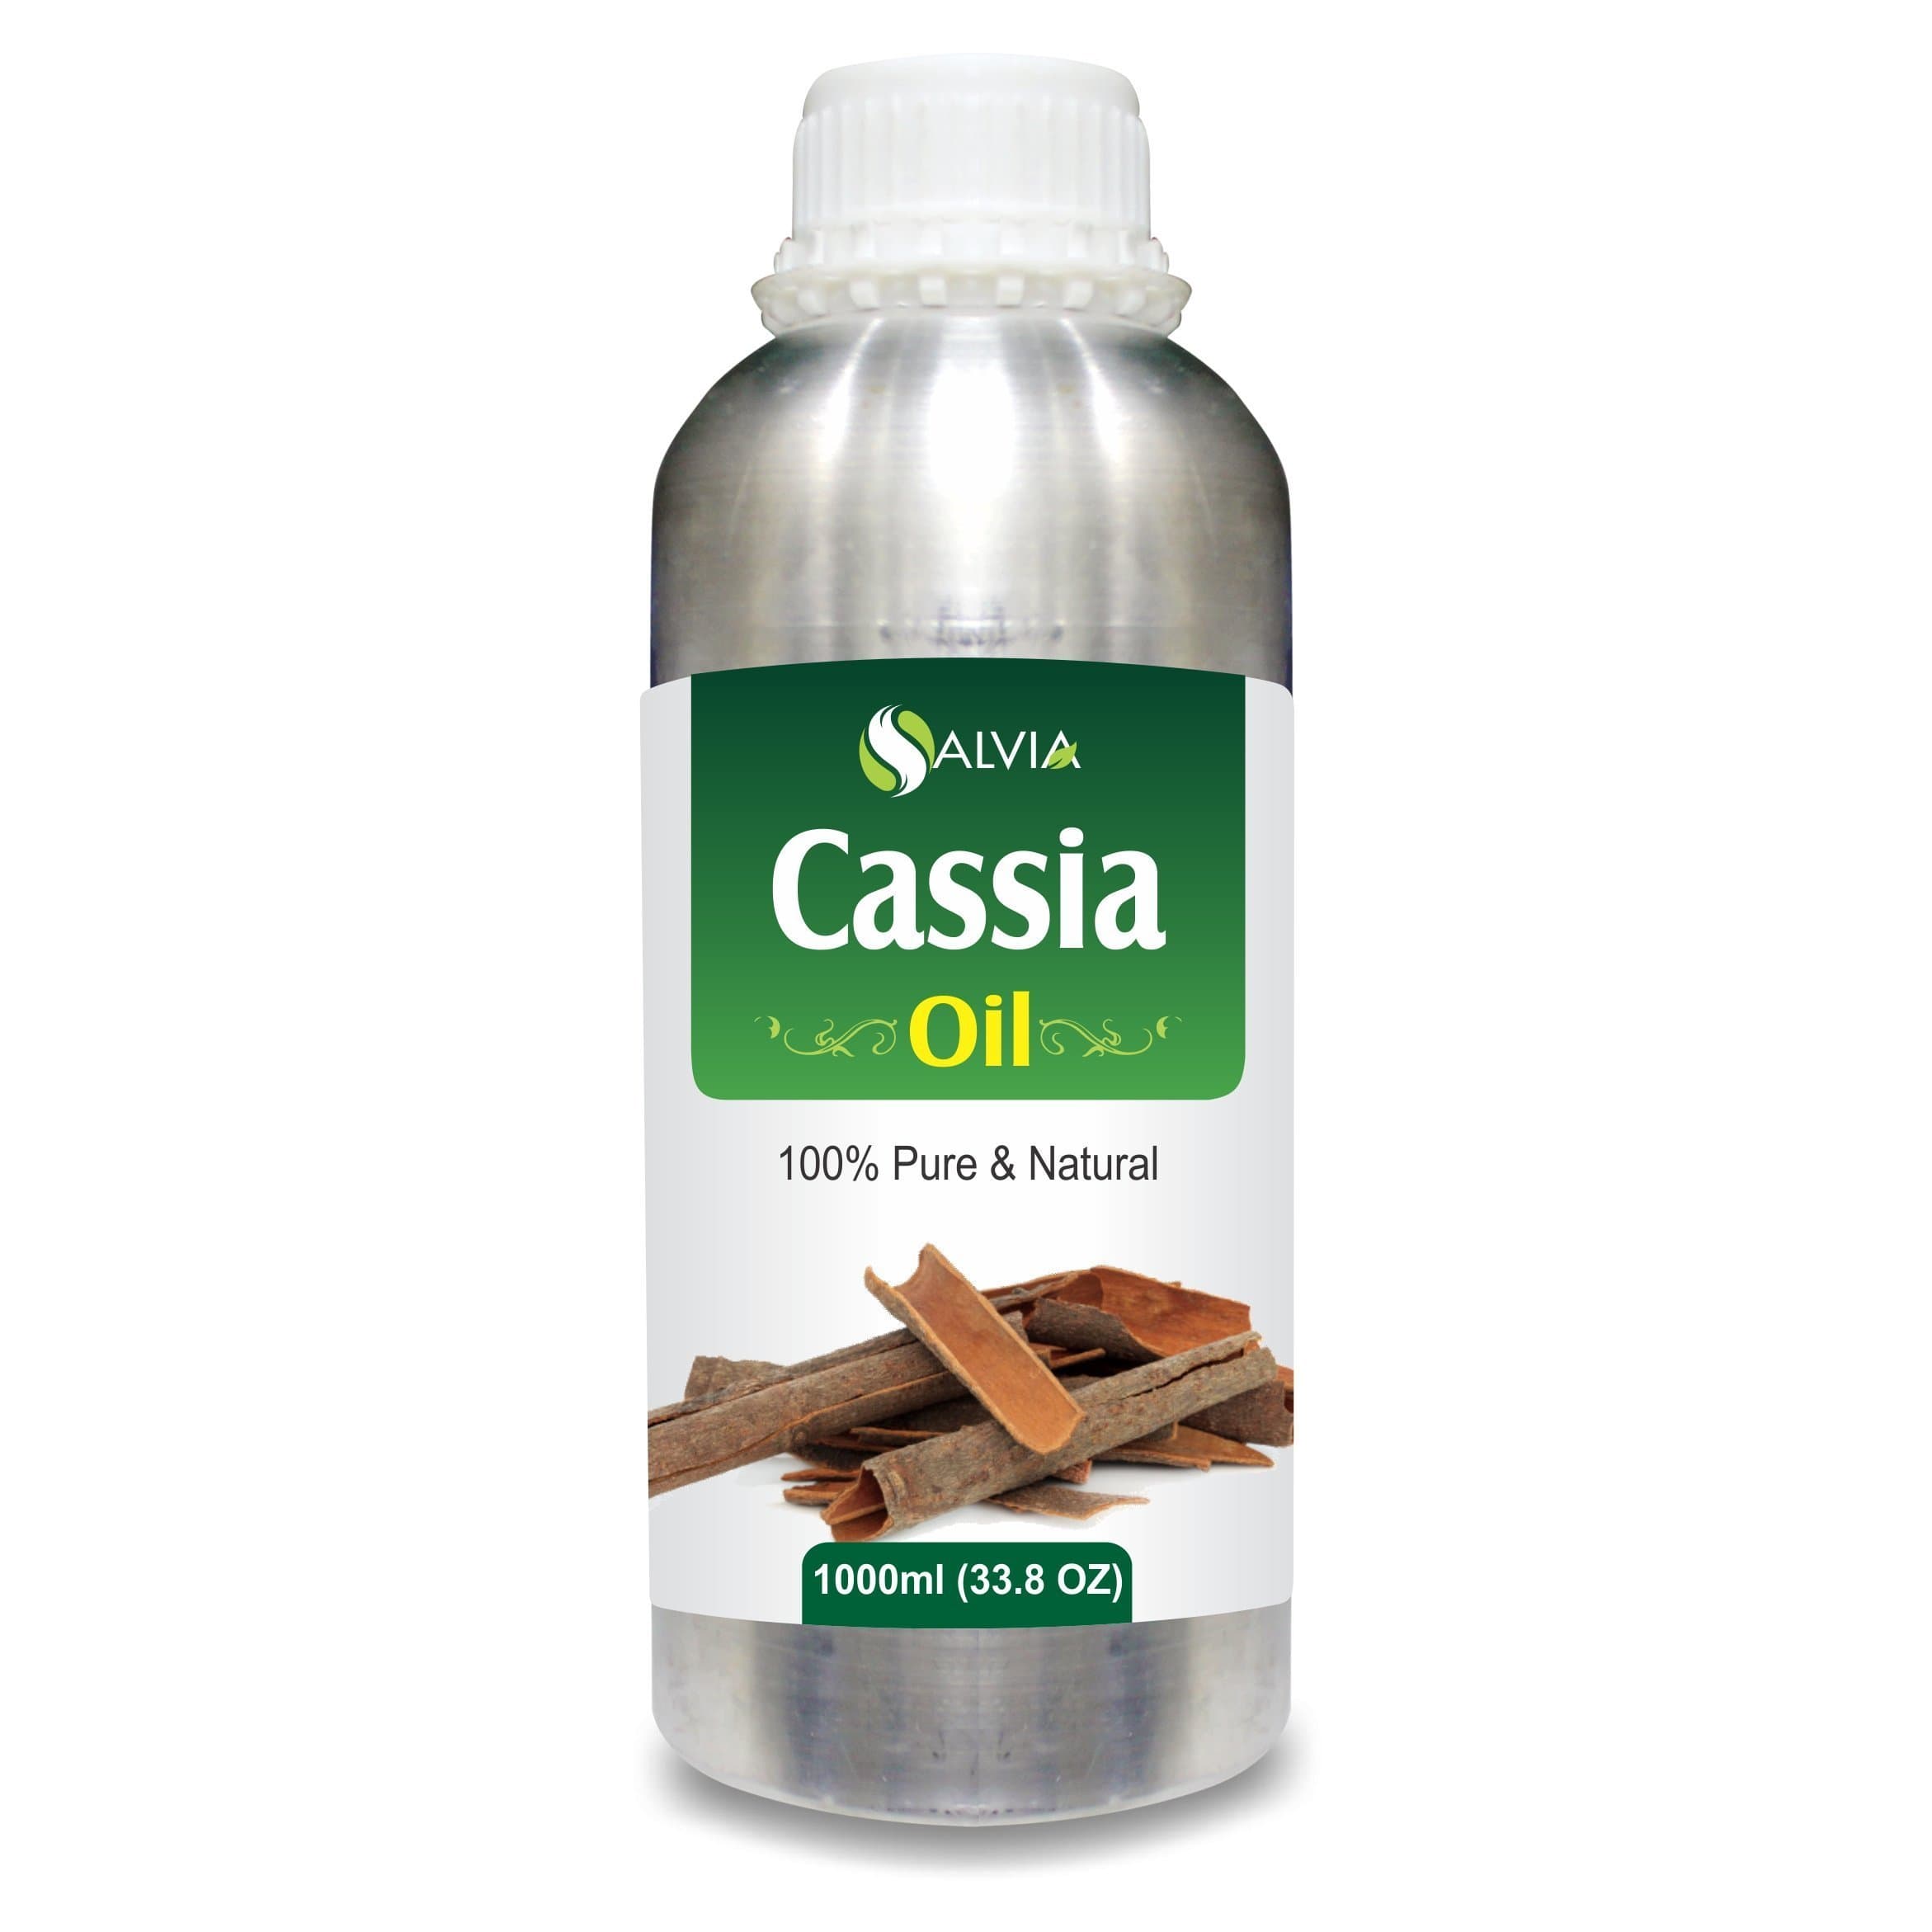 cassia oil for hair growth